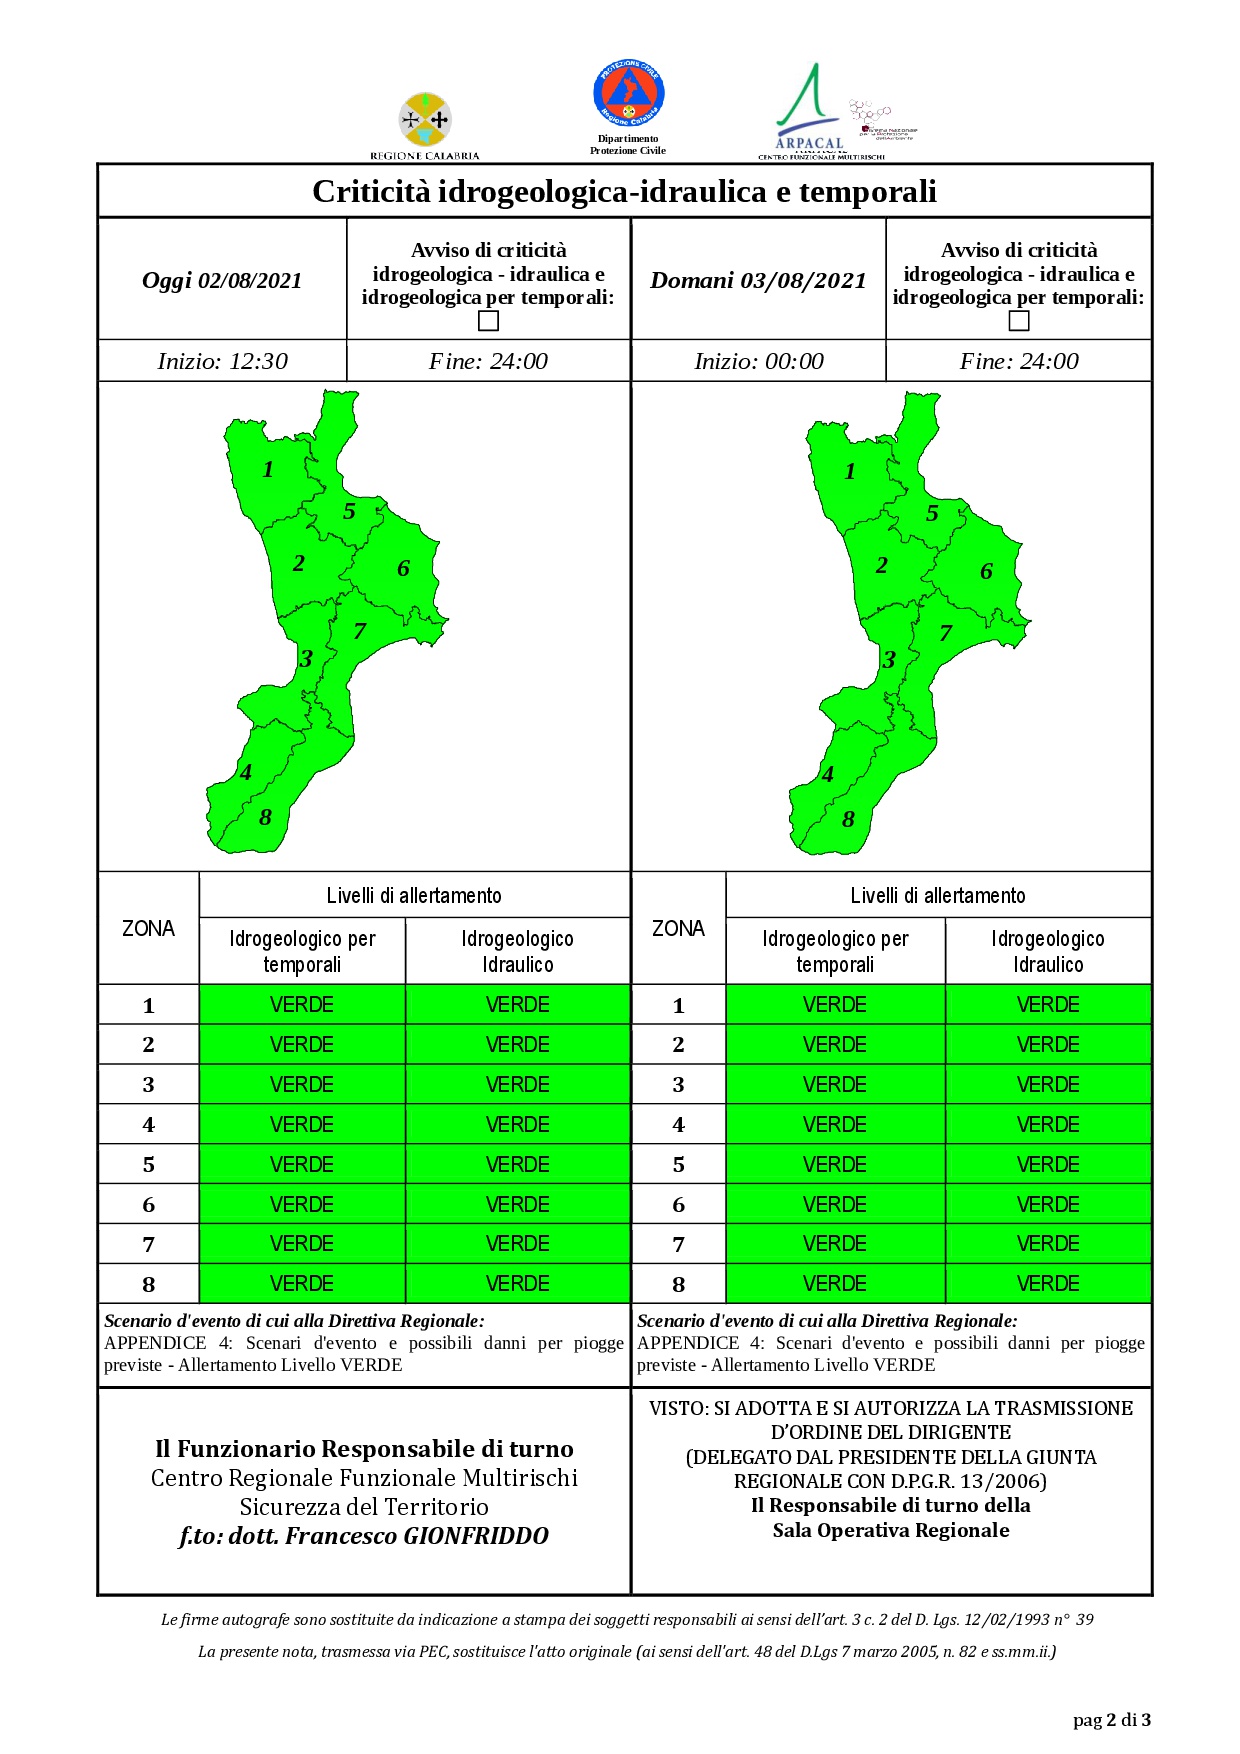 Criticità idrogeologica-idraulica e temporali in Calabria 02-08-2021